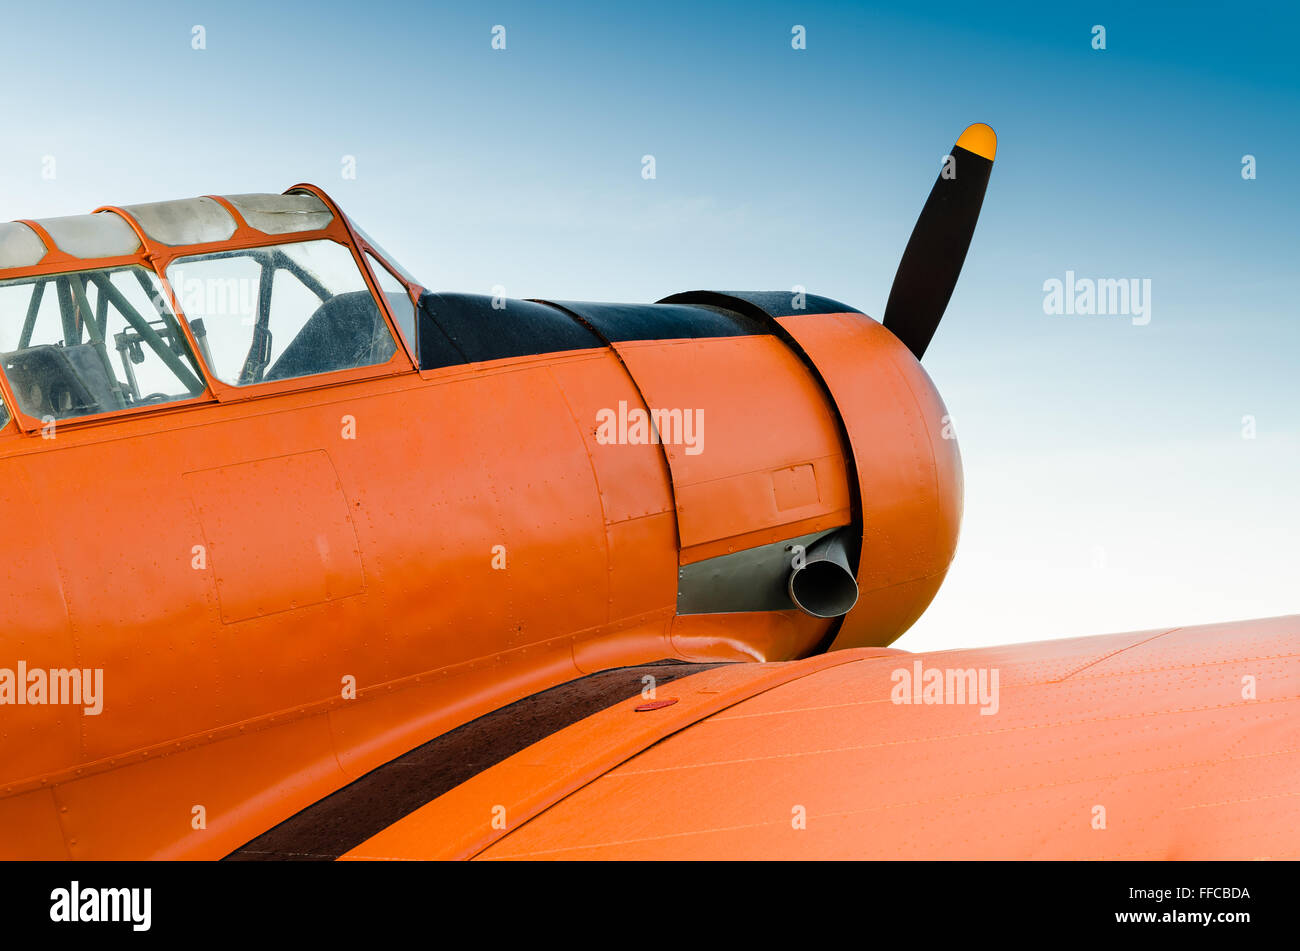 Adventure in the sky, Old airplane, orange Stock Photo